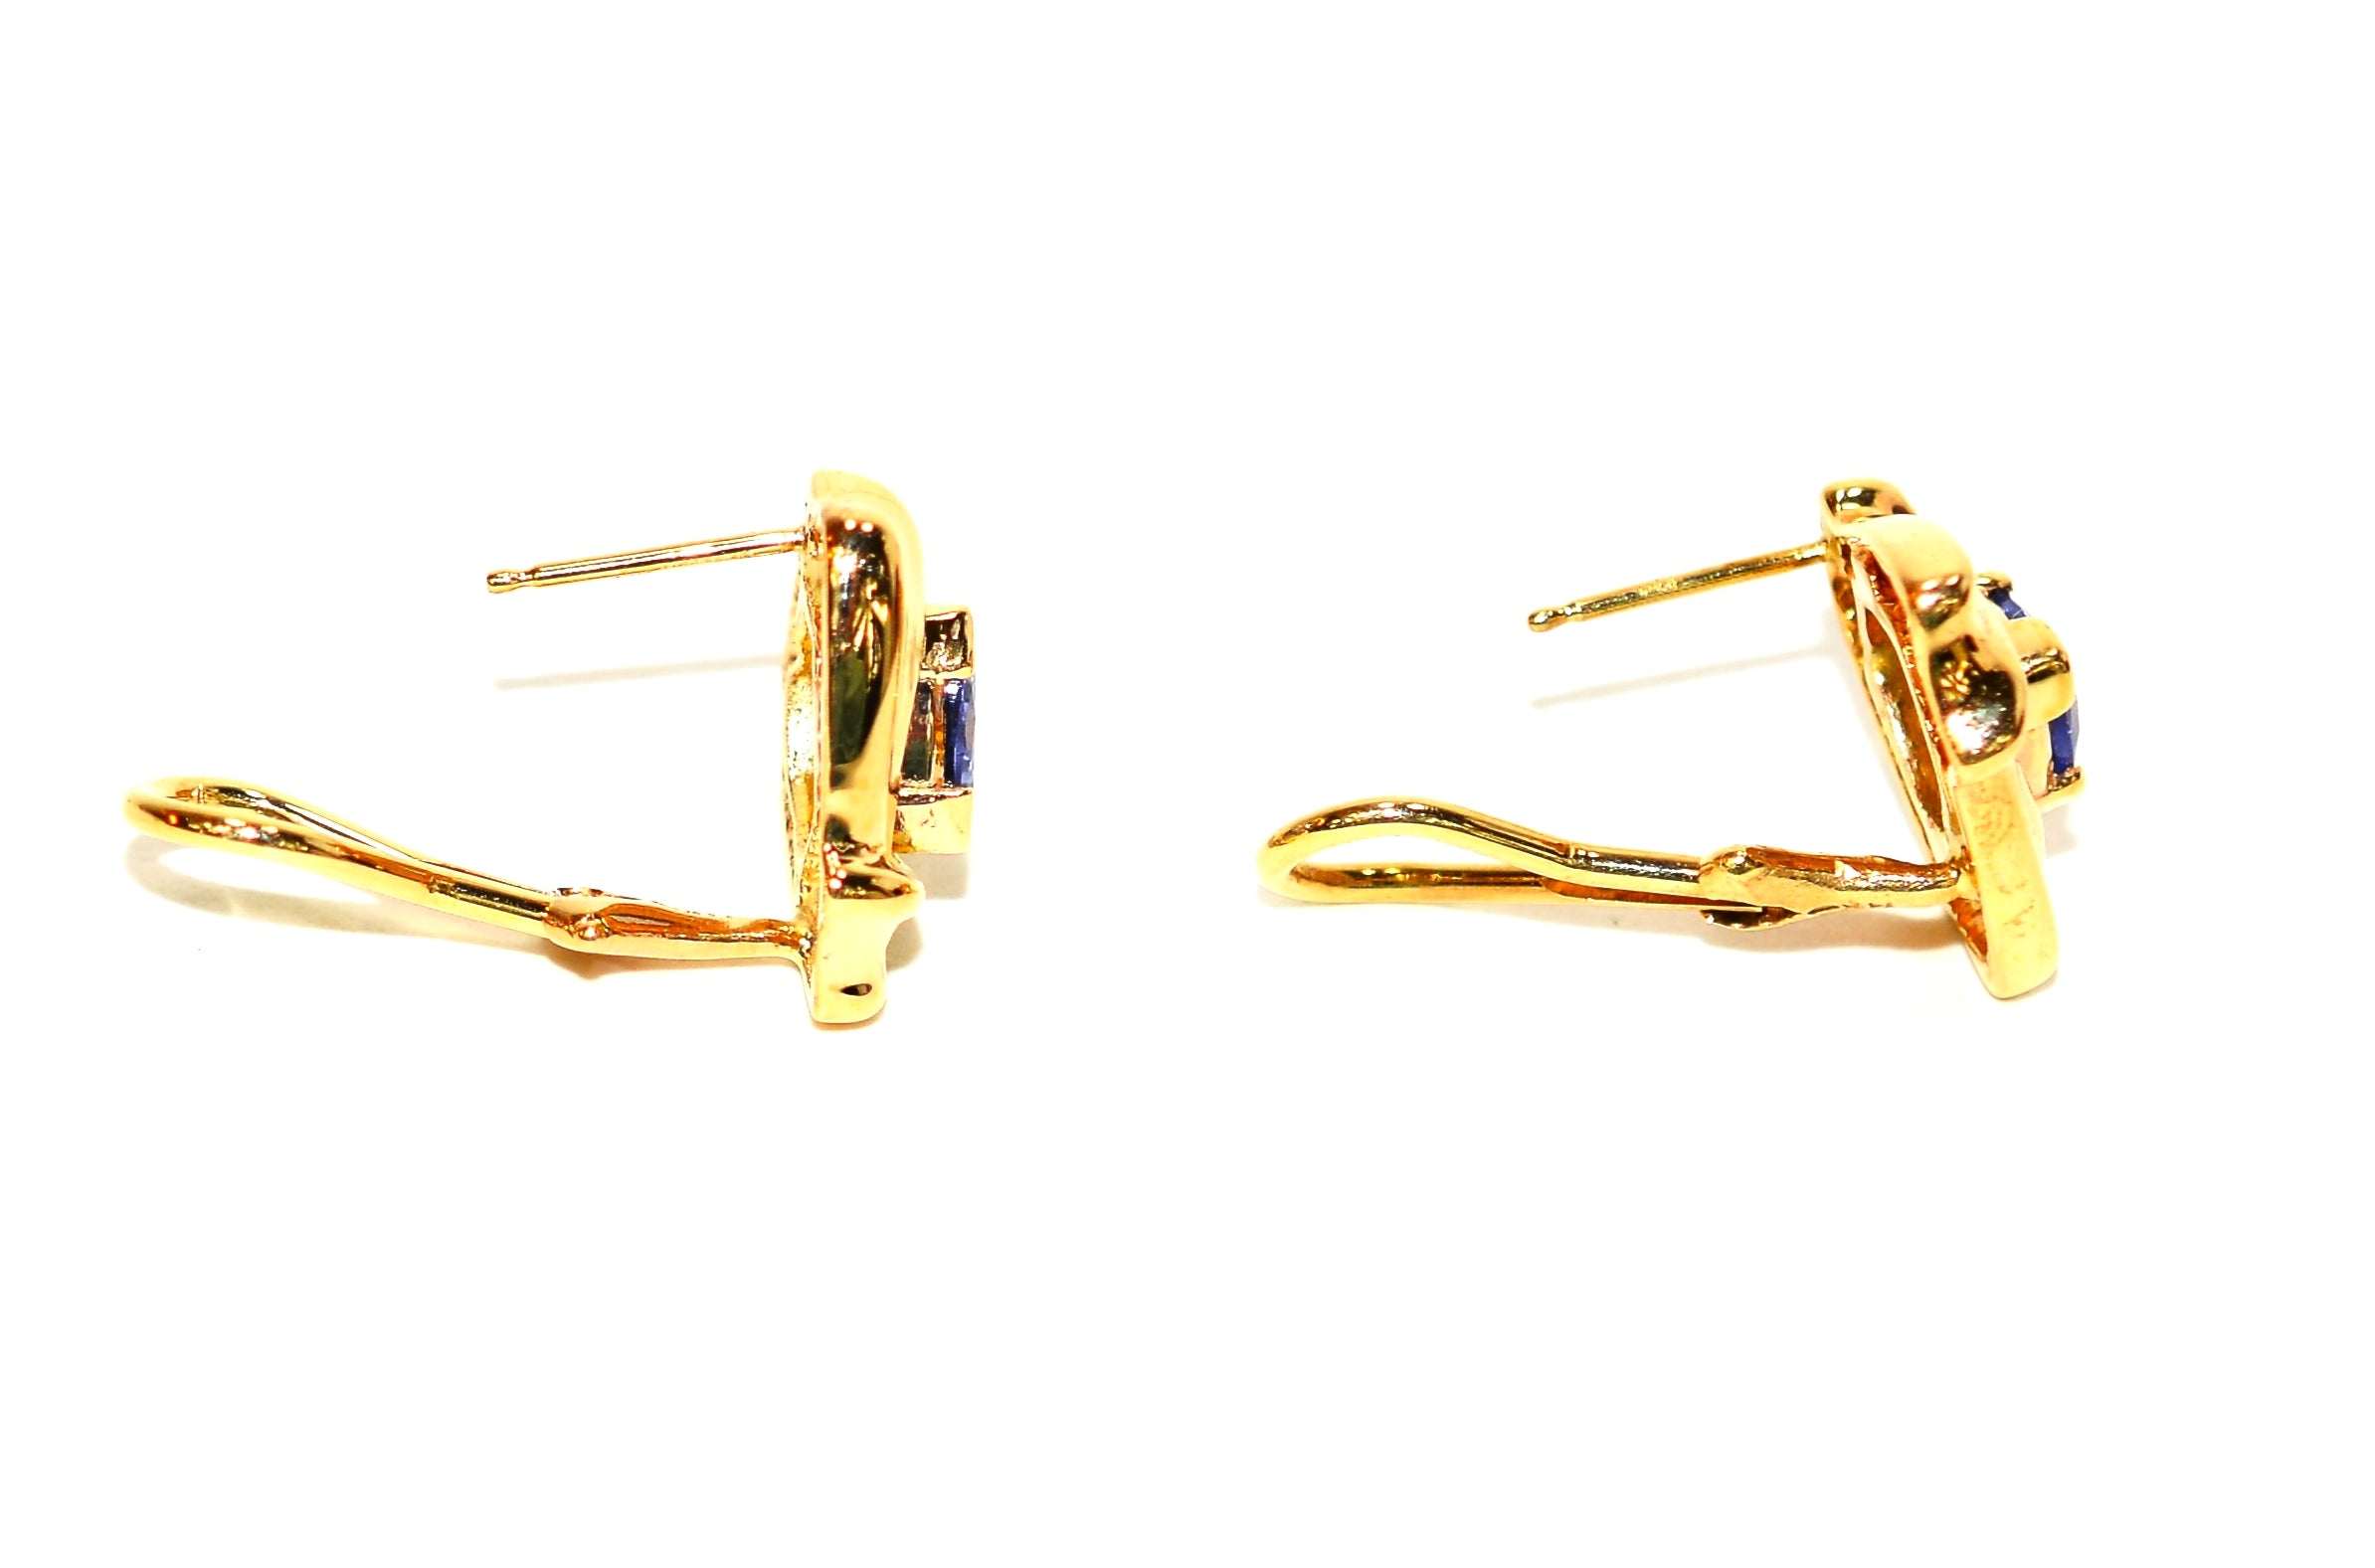 Natural D'Block Tanzanite Earrings 14K Solid Gold 1.44tcw Gemstone Earrings Statement Earrings Cocktail Earrings Birthstone Earrings Purple